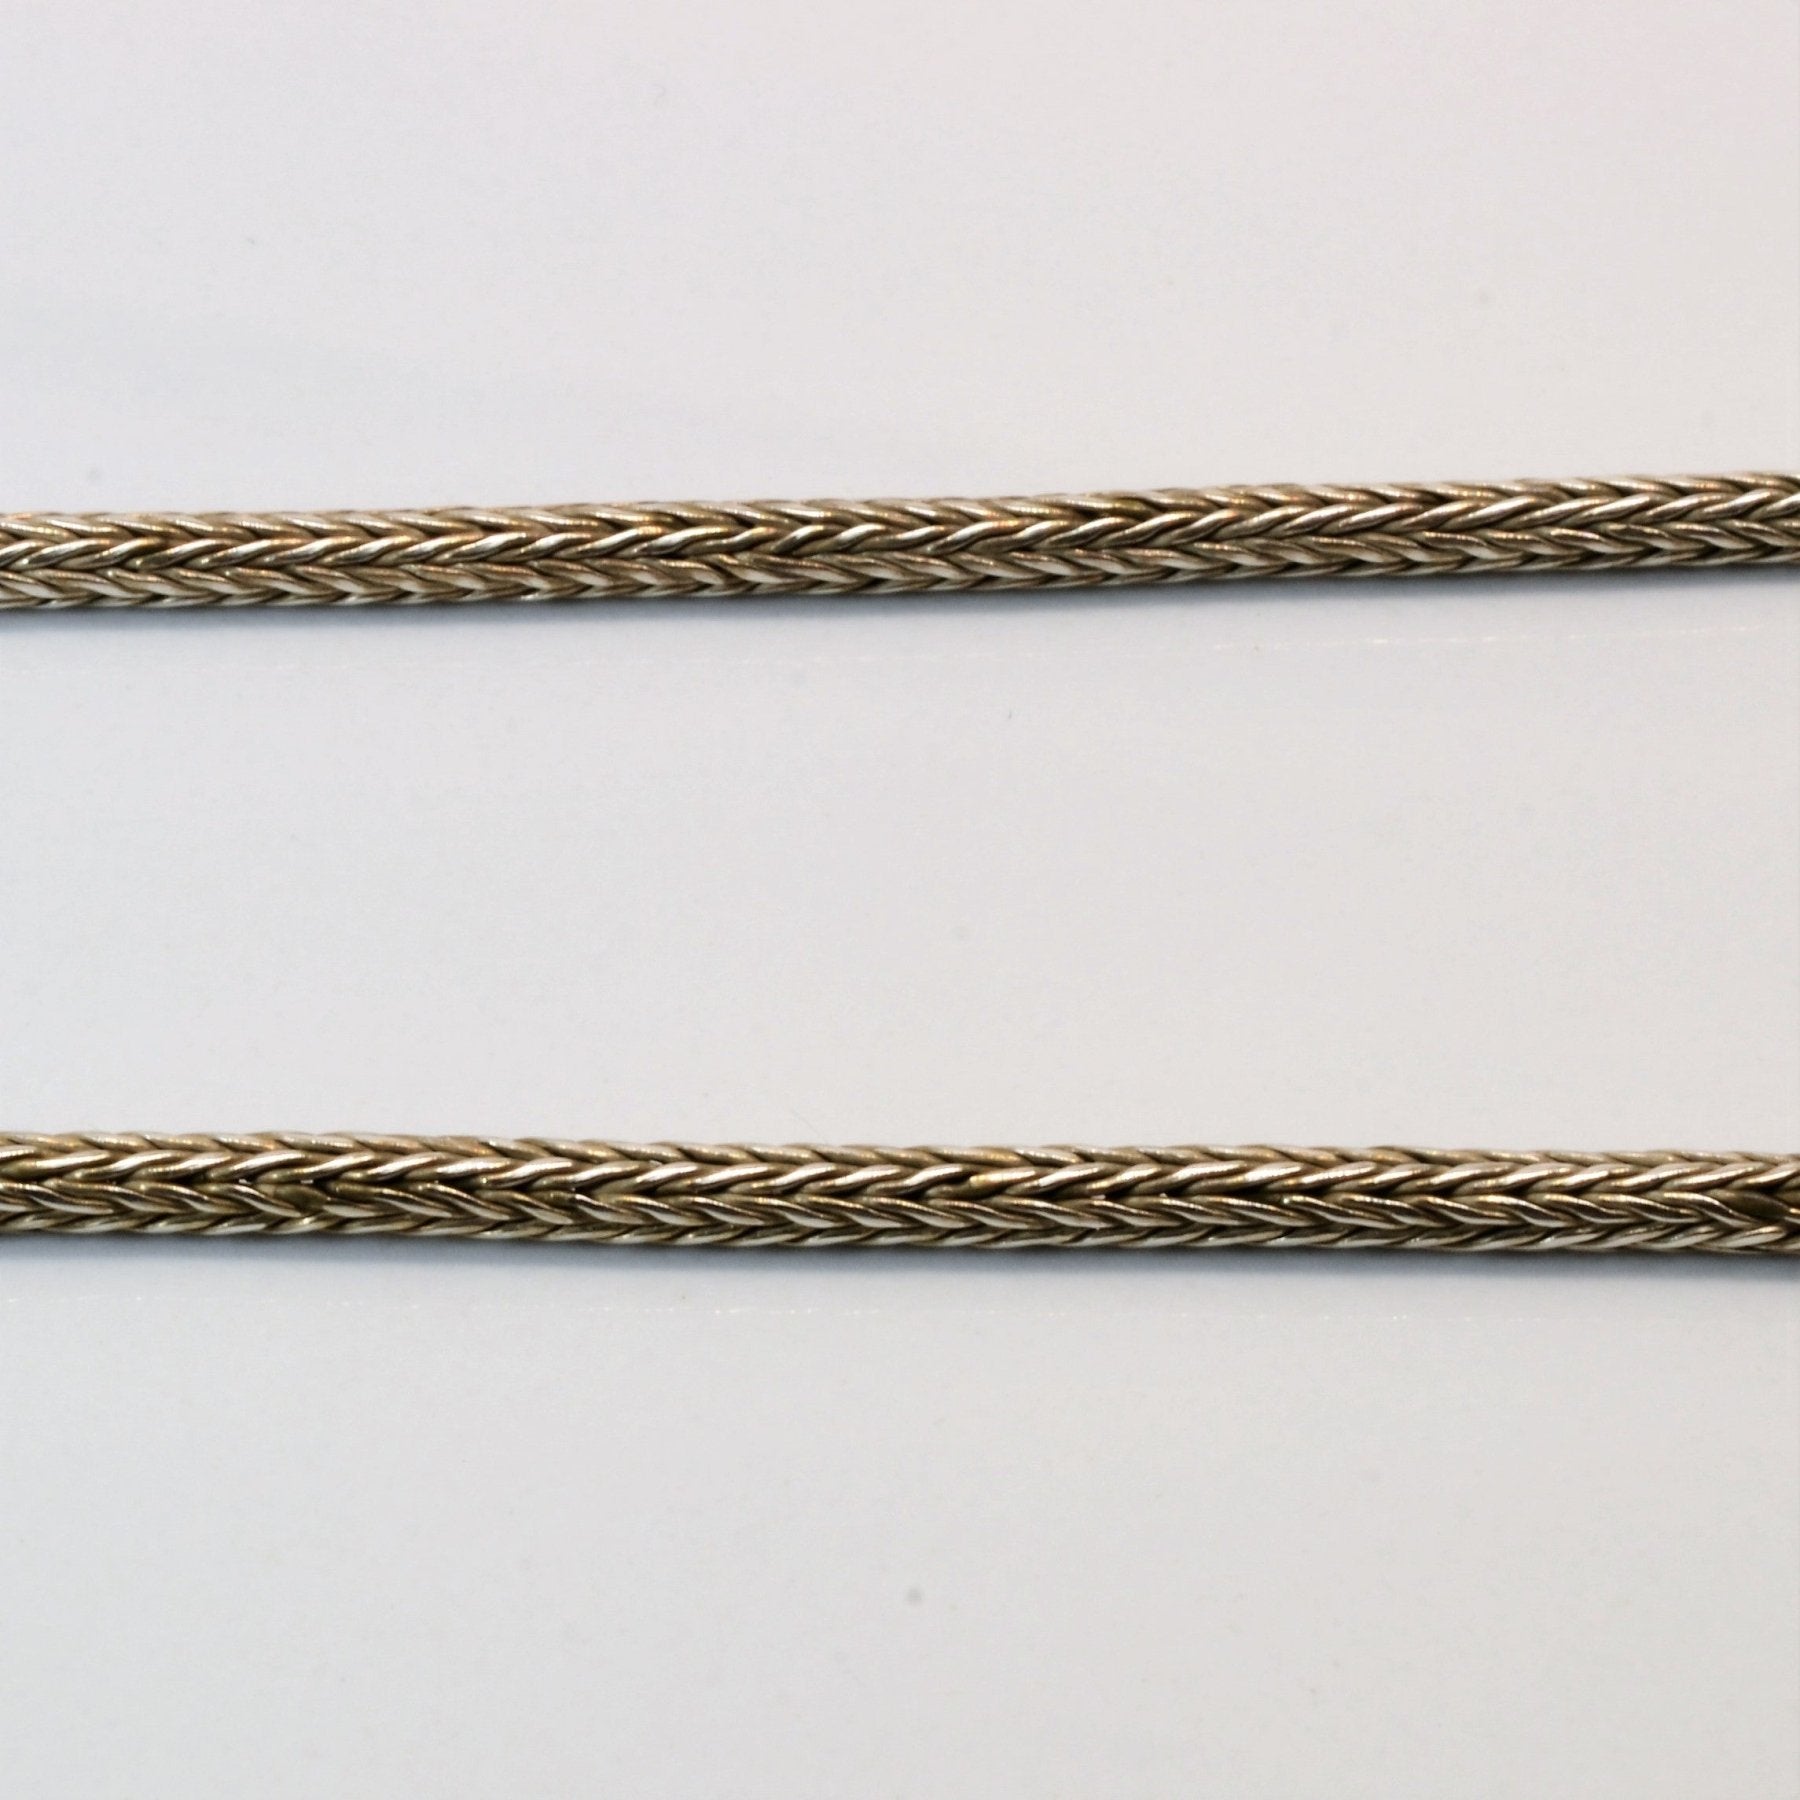 'Effy' Multi-Gemstone Pendant Necklace | 1.59ctw | 18